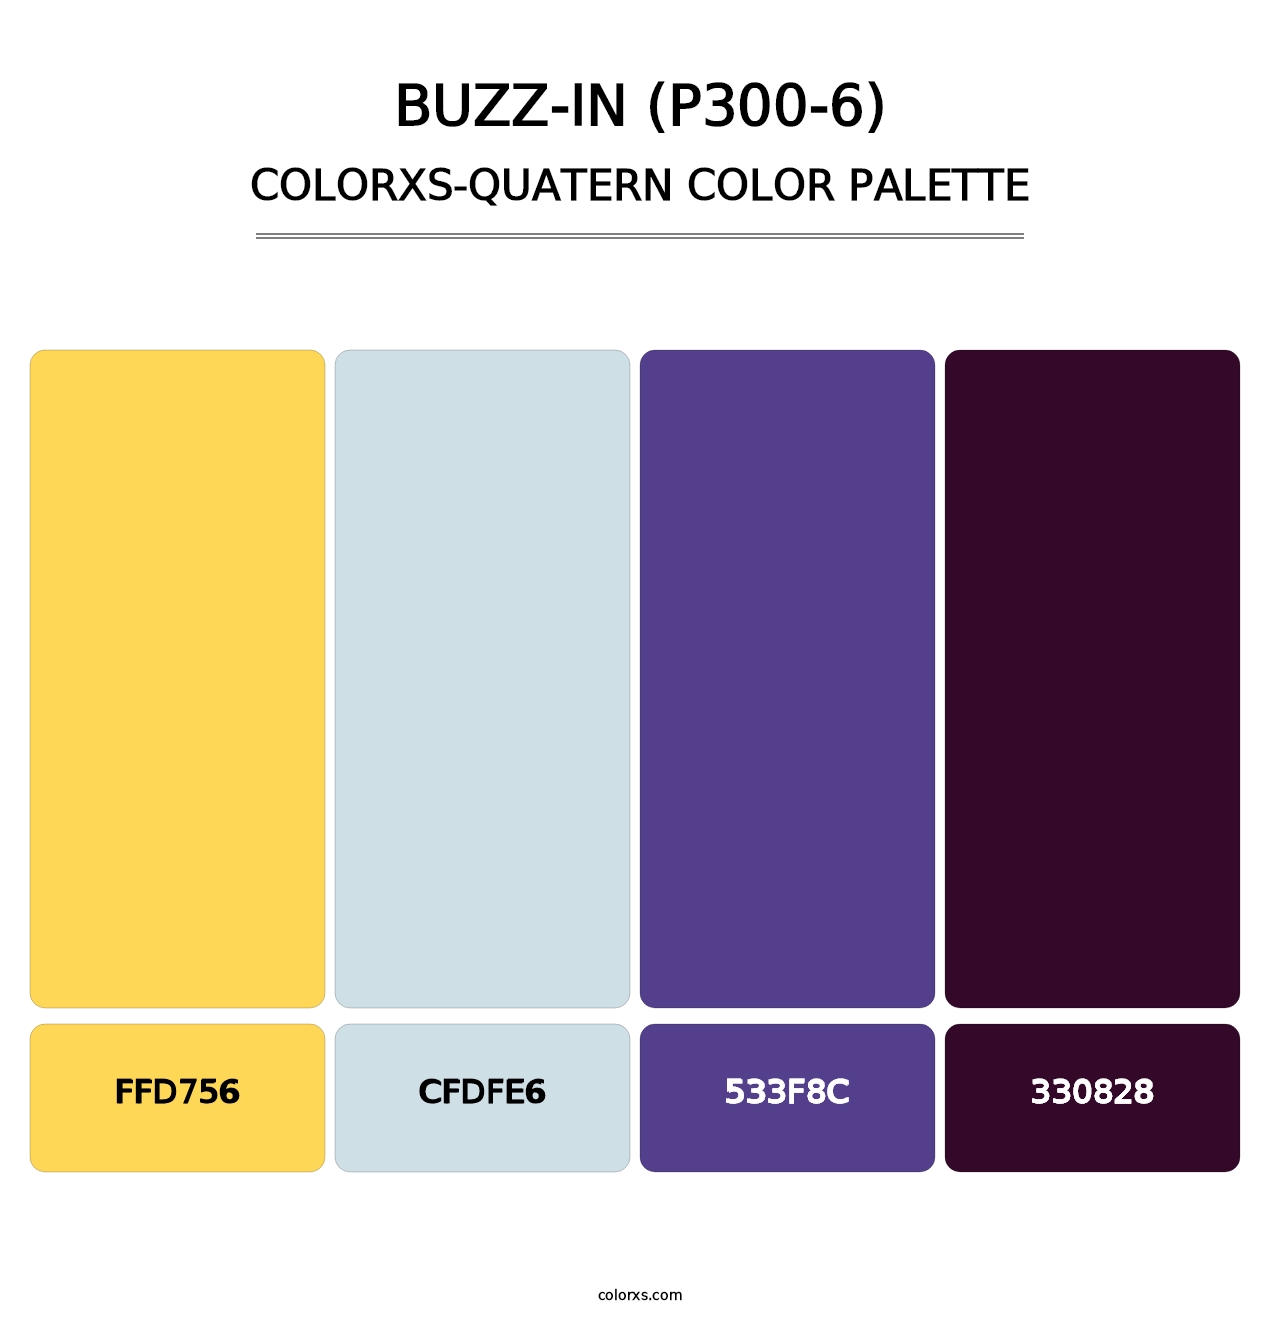 Buzz-In (P300-6) - Colorxs Quatern Palette